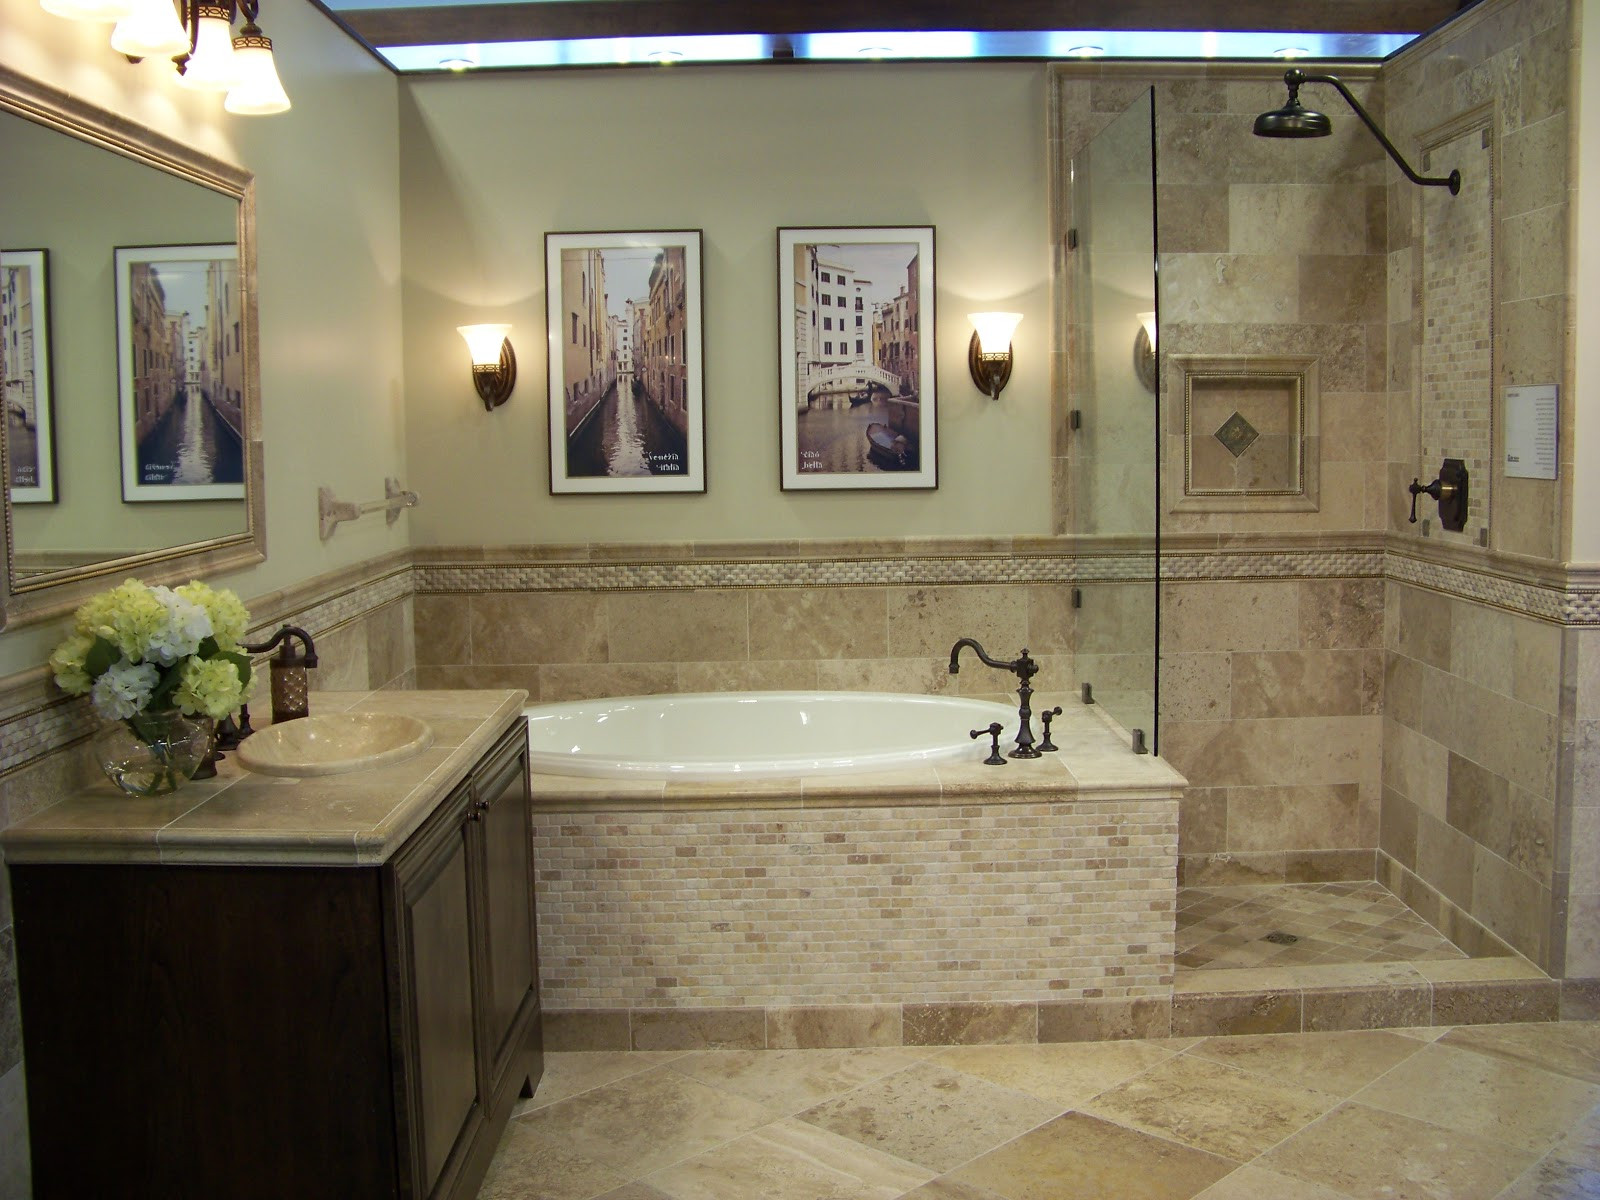 Bathroom Shower Tile Gallery
 Home Decor Bud ista Bathroom Inspiration The Tile Shop